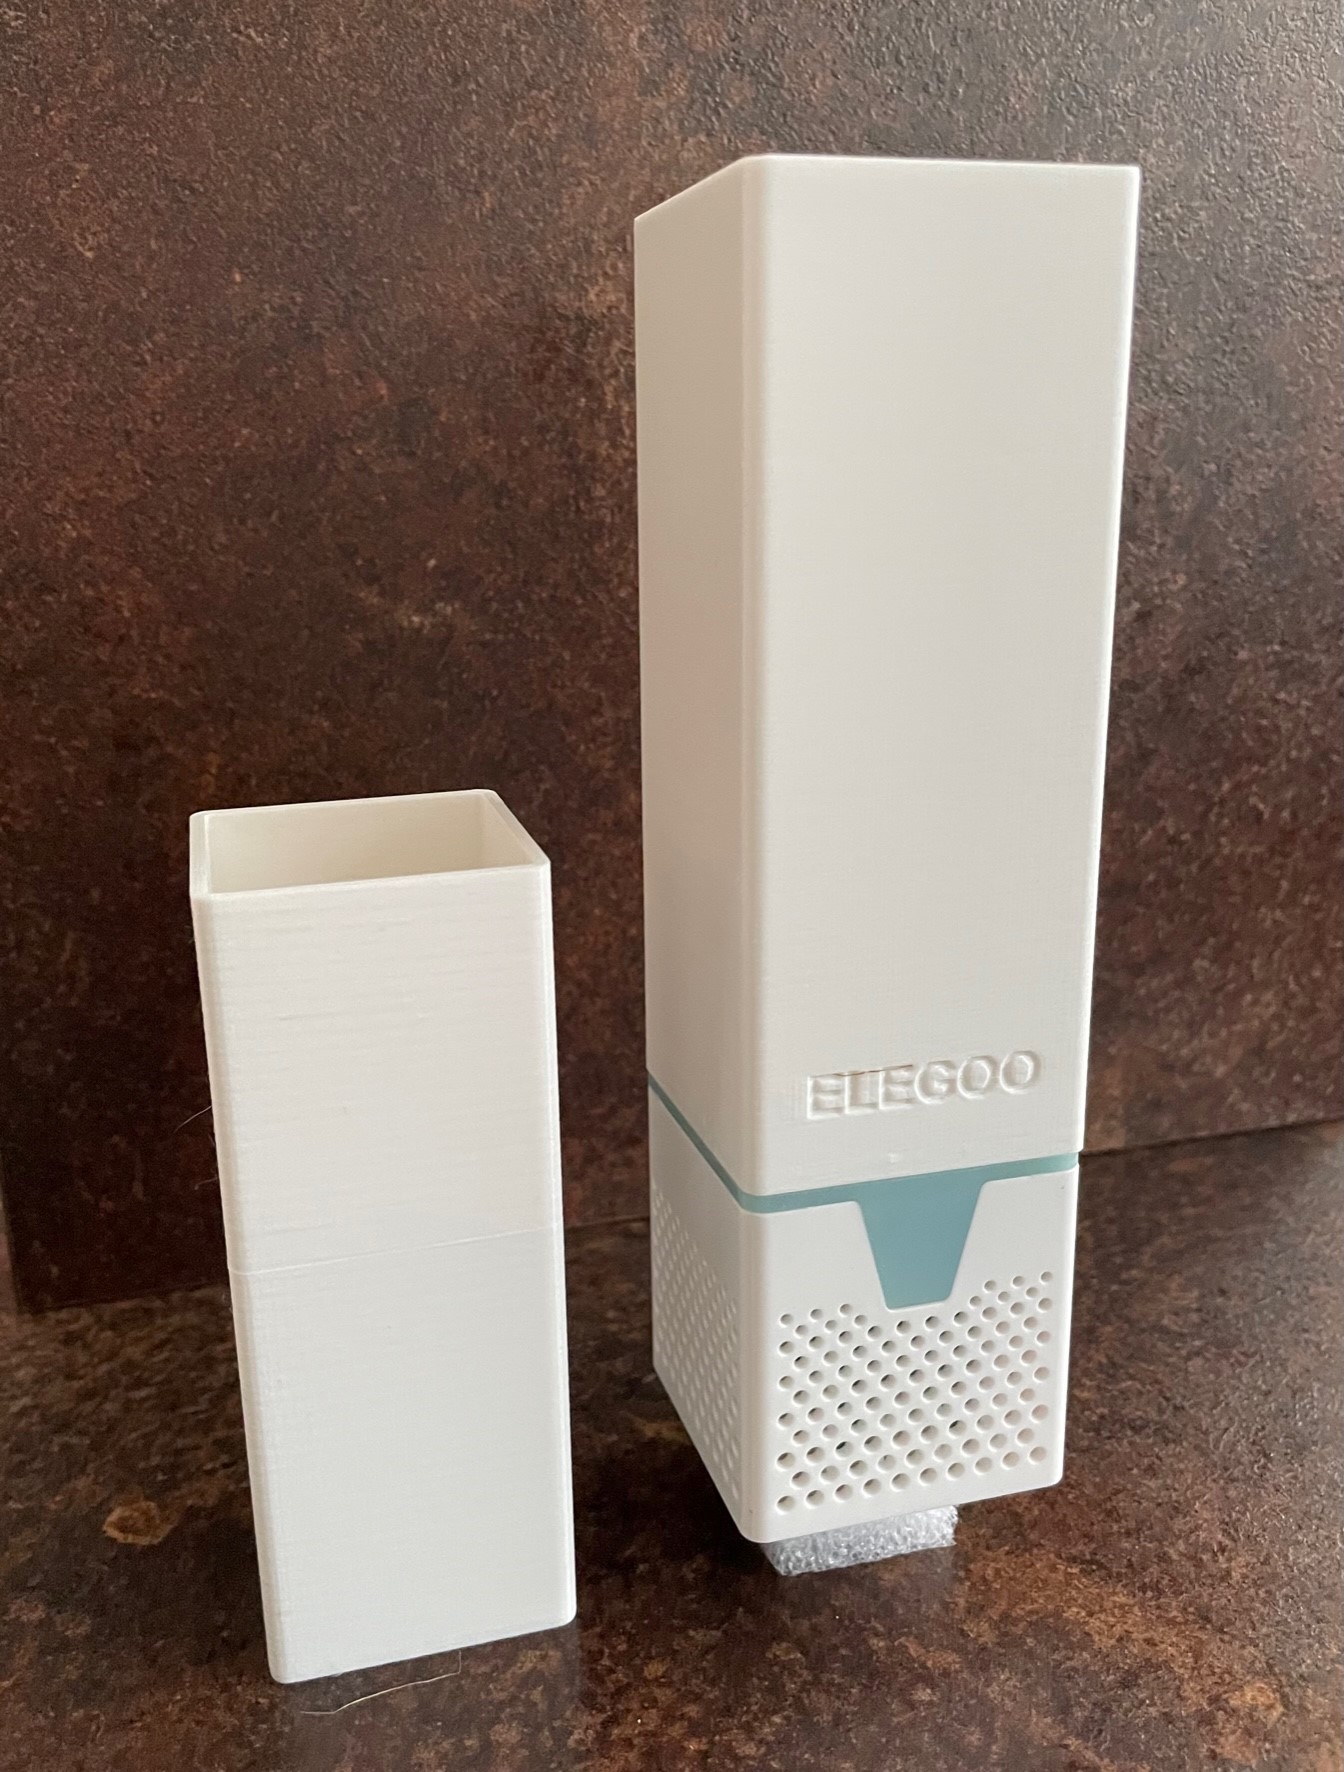 Elegoo Built-in Mini Air Purifier replacement filter box